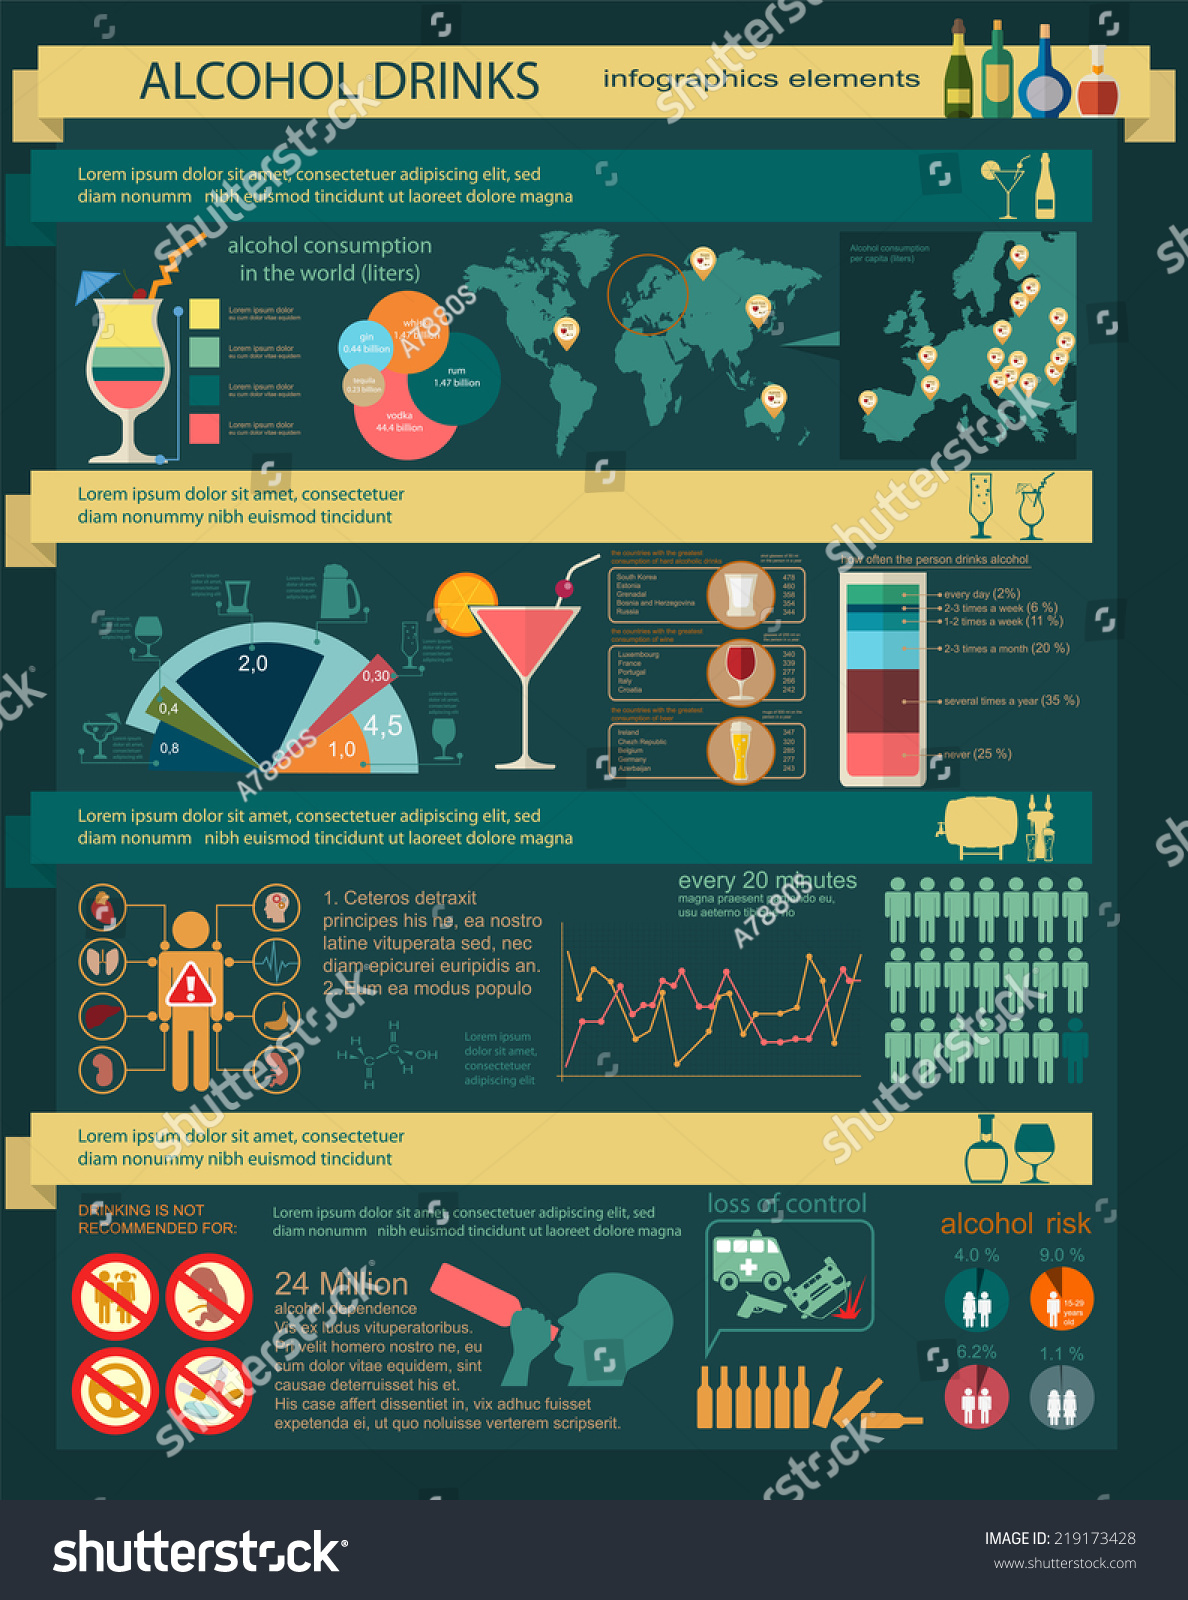 Alcohol Drinks Infographic. Vector Illustration - 219173428 : Shutterstock